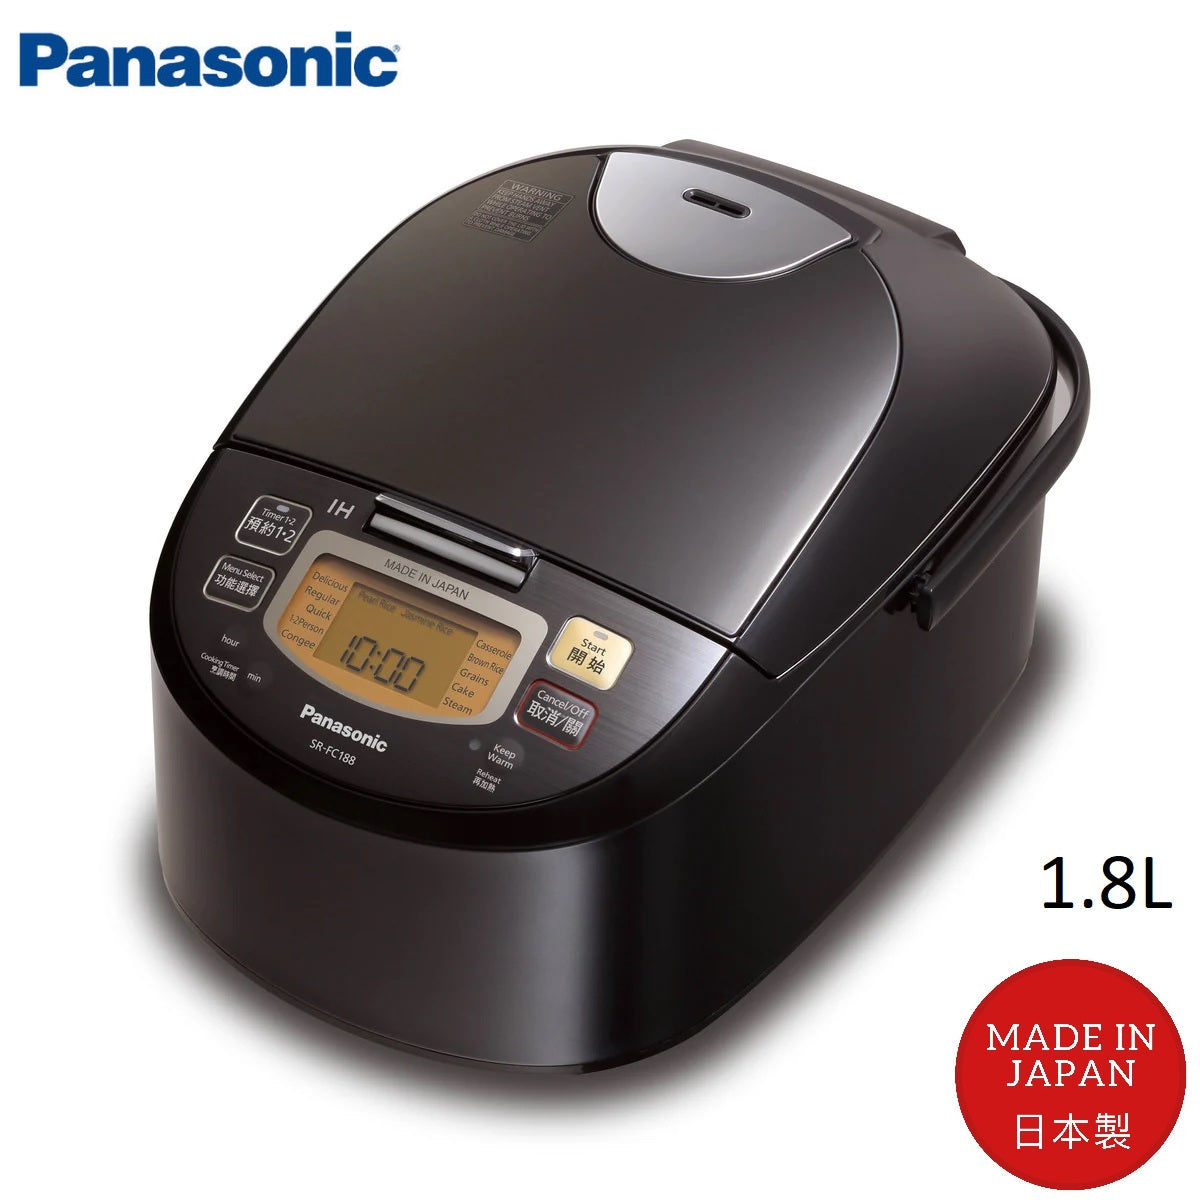 Panasonic Rice Cooker IH SR-FC108/188 (Made in Japan)